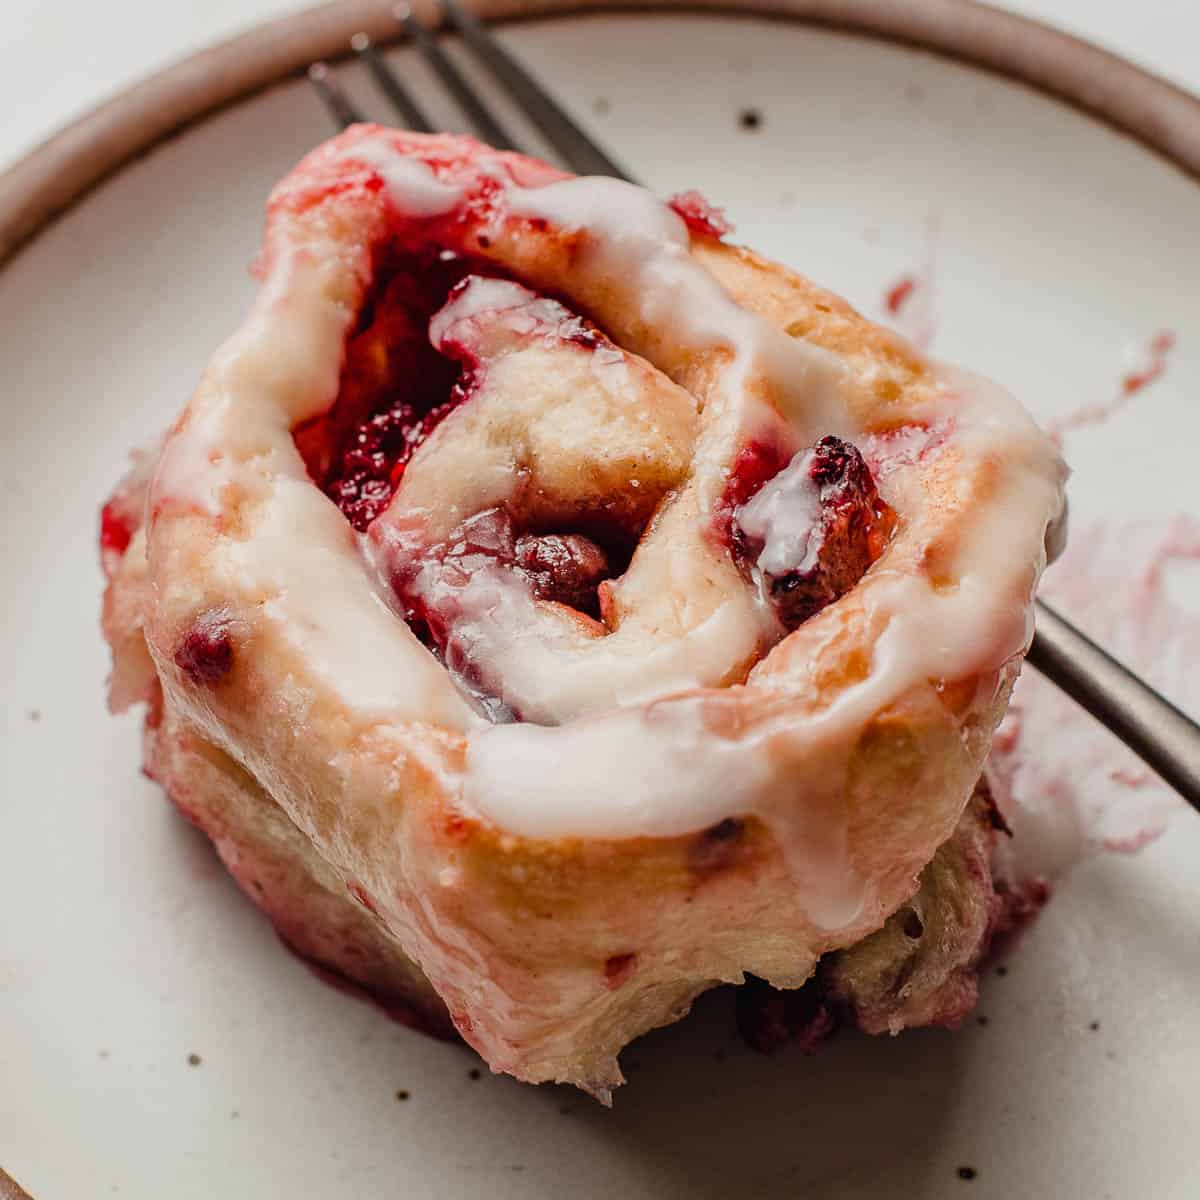 A berry sourdough sweet roll on a plate.